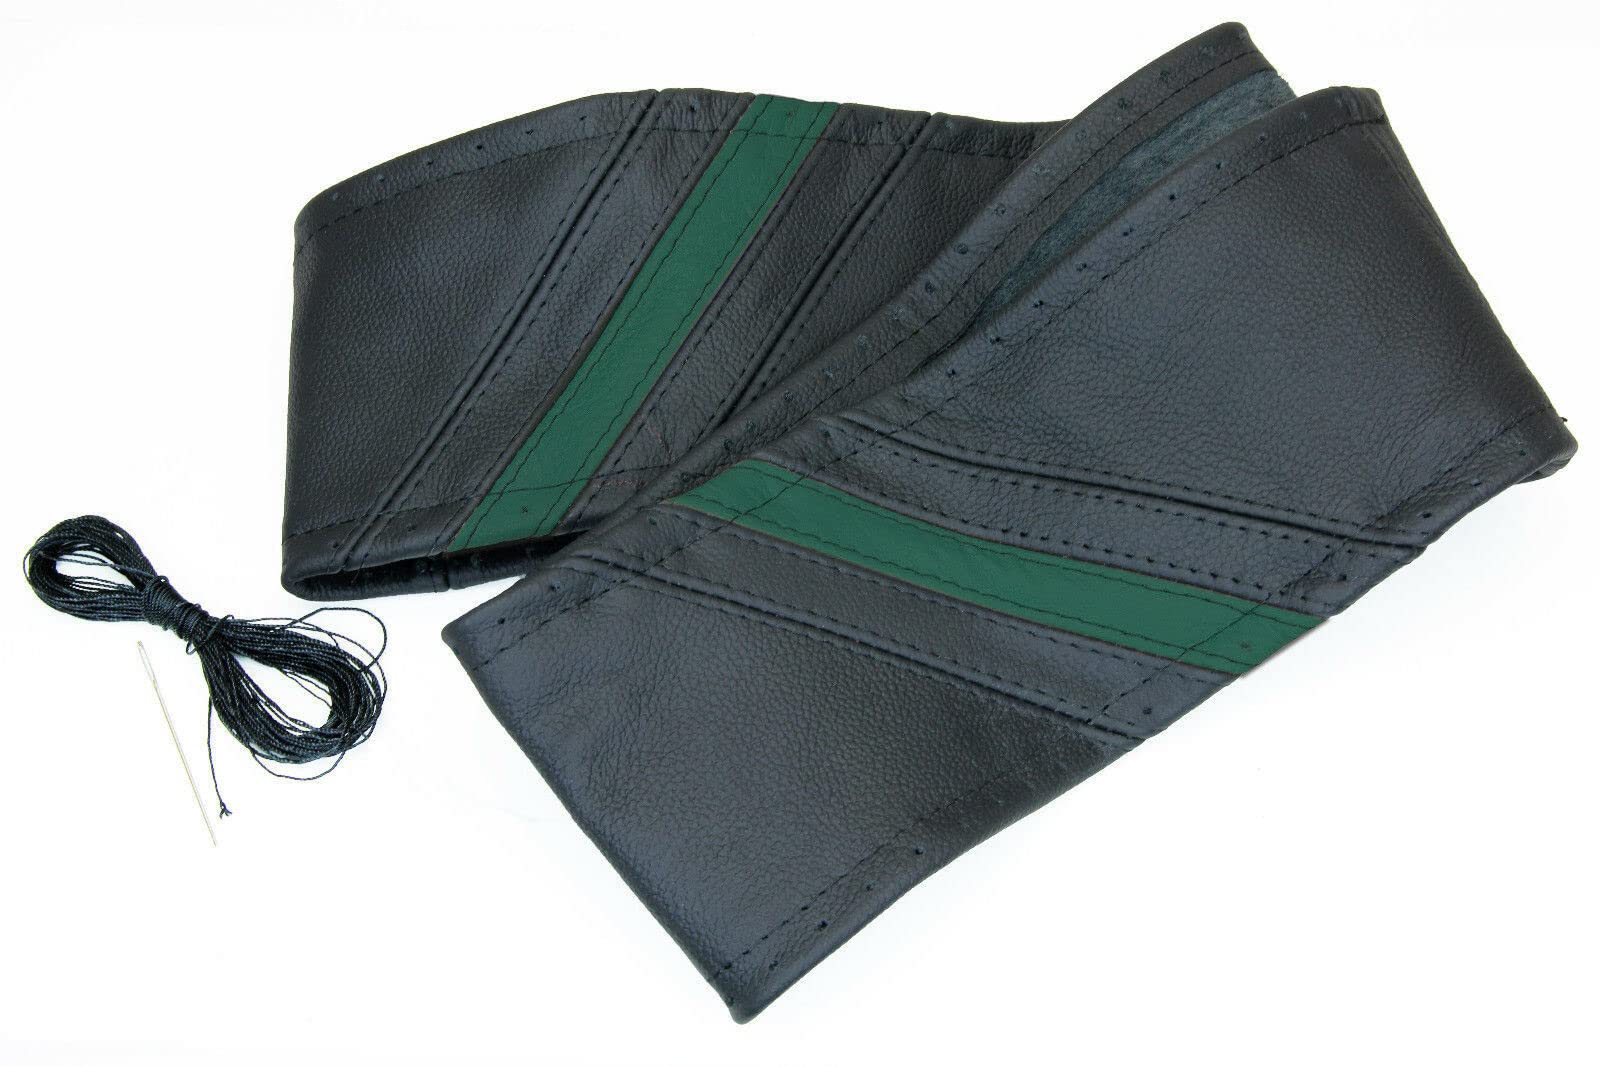 Recambo grün/schwarz Lenkradbezug echt Leder zum Schnüren Lenkrad Schoner 37-39 cm von Recambo